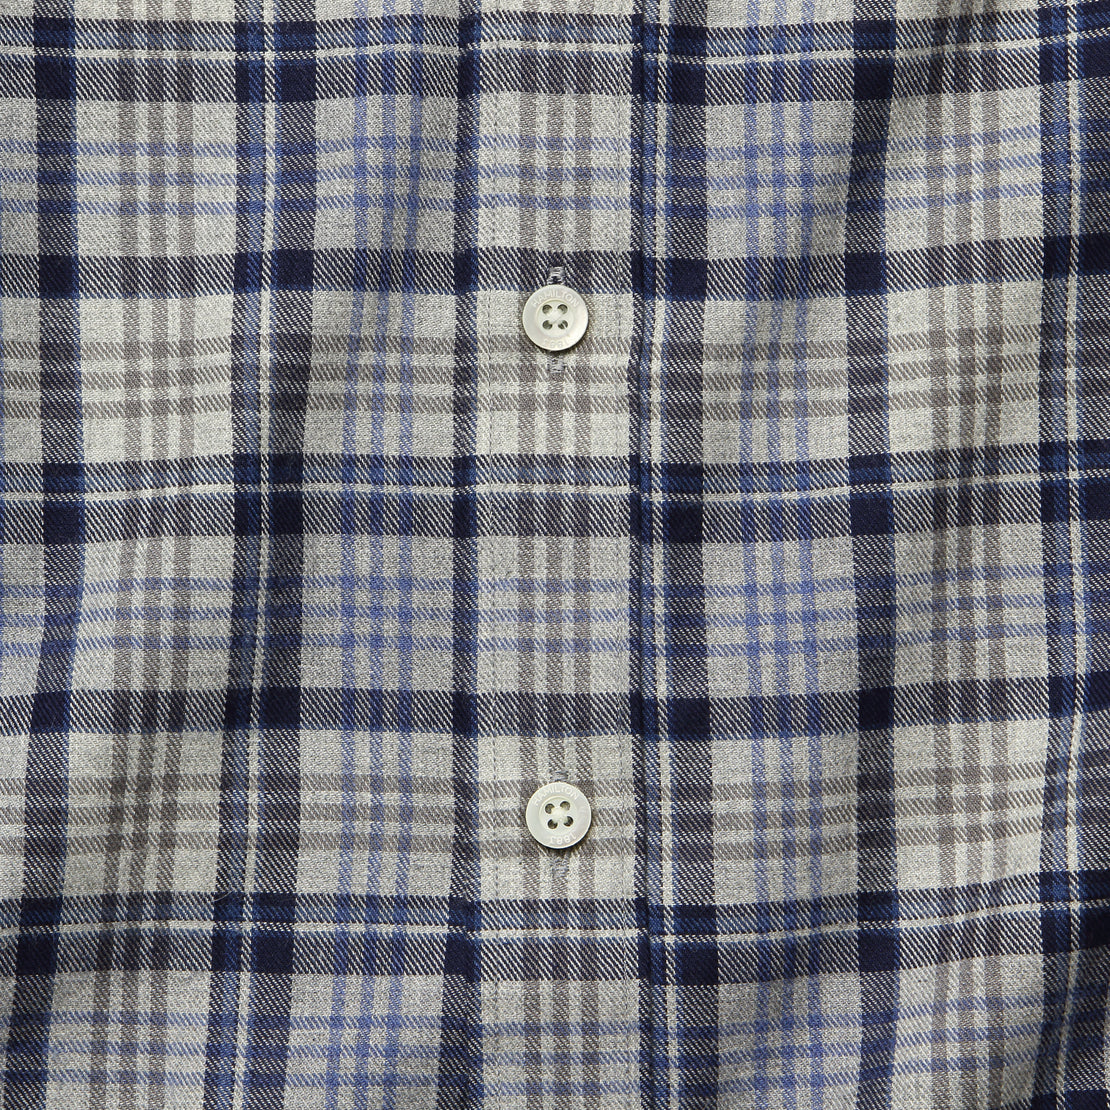 Plaid Flannel - Navy/Grey - Hamilton Shirt Co. - STAG Provisions - Tops - L/S Woven - Plaid